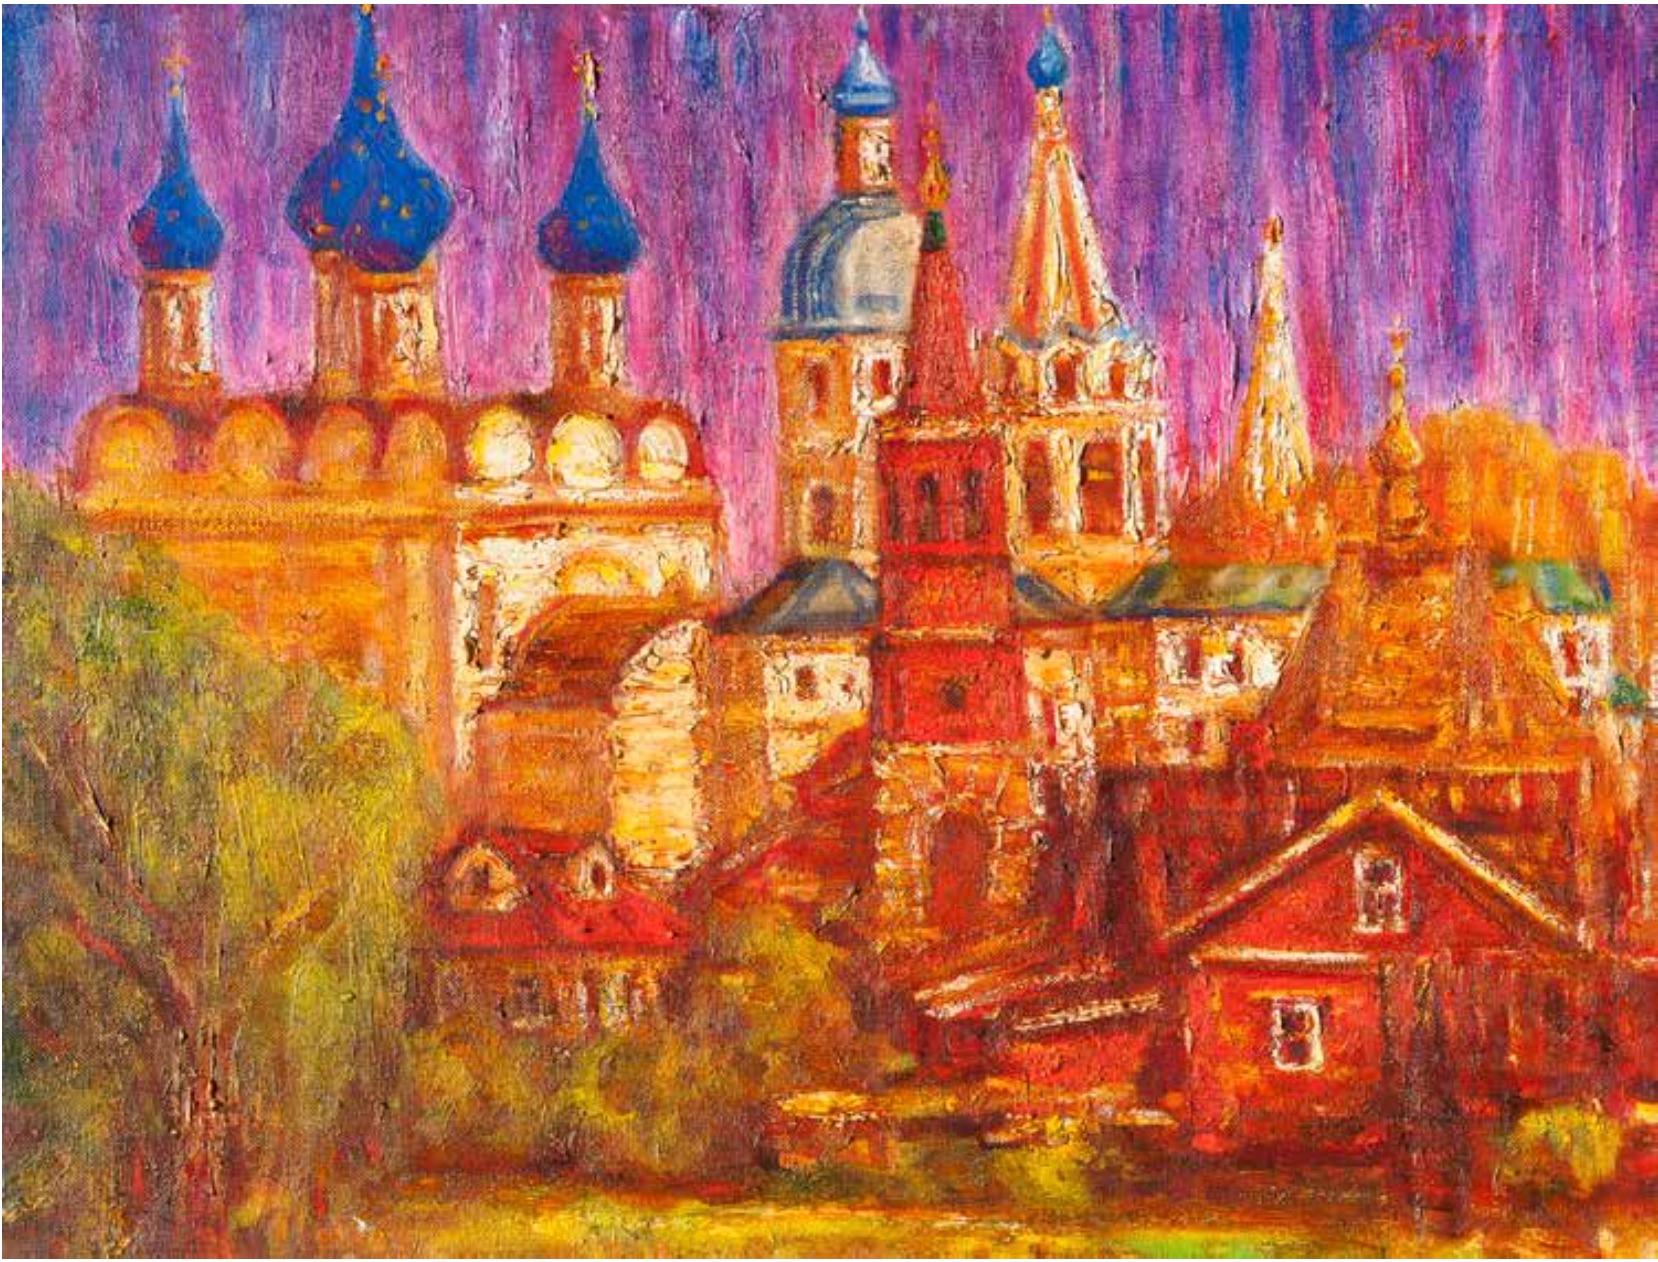 Unique oil on Burlap painting by Alexander Evgrafov
Suzdal Evening